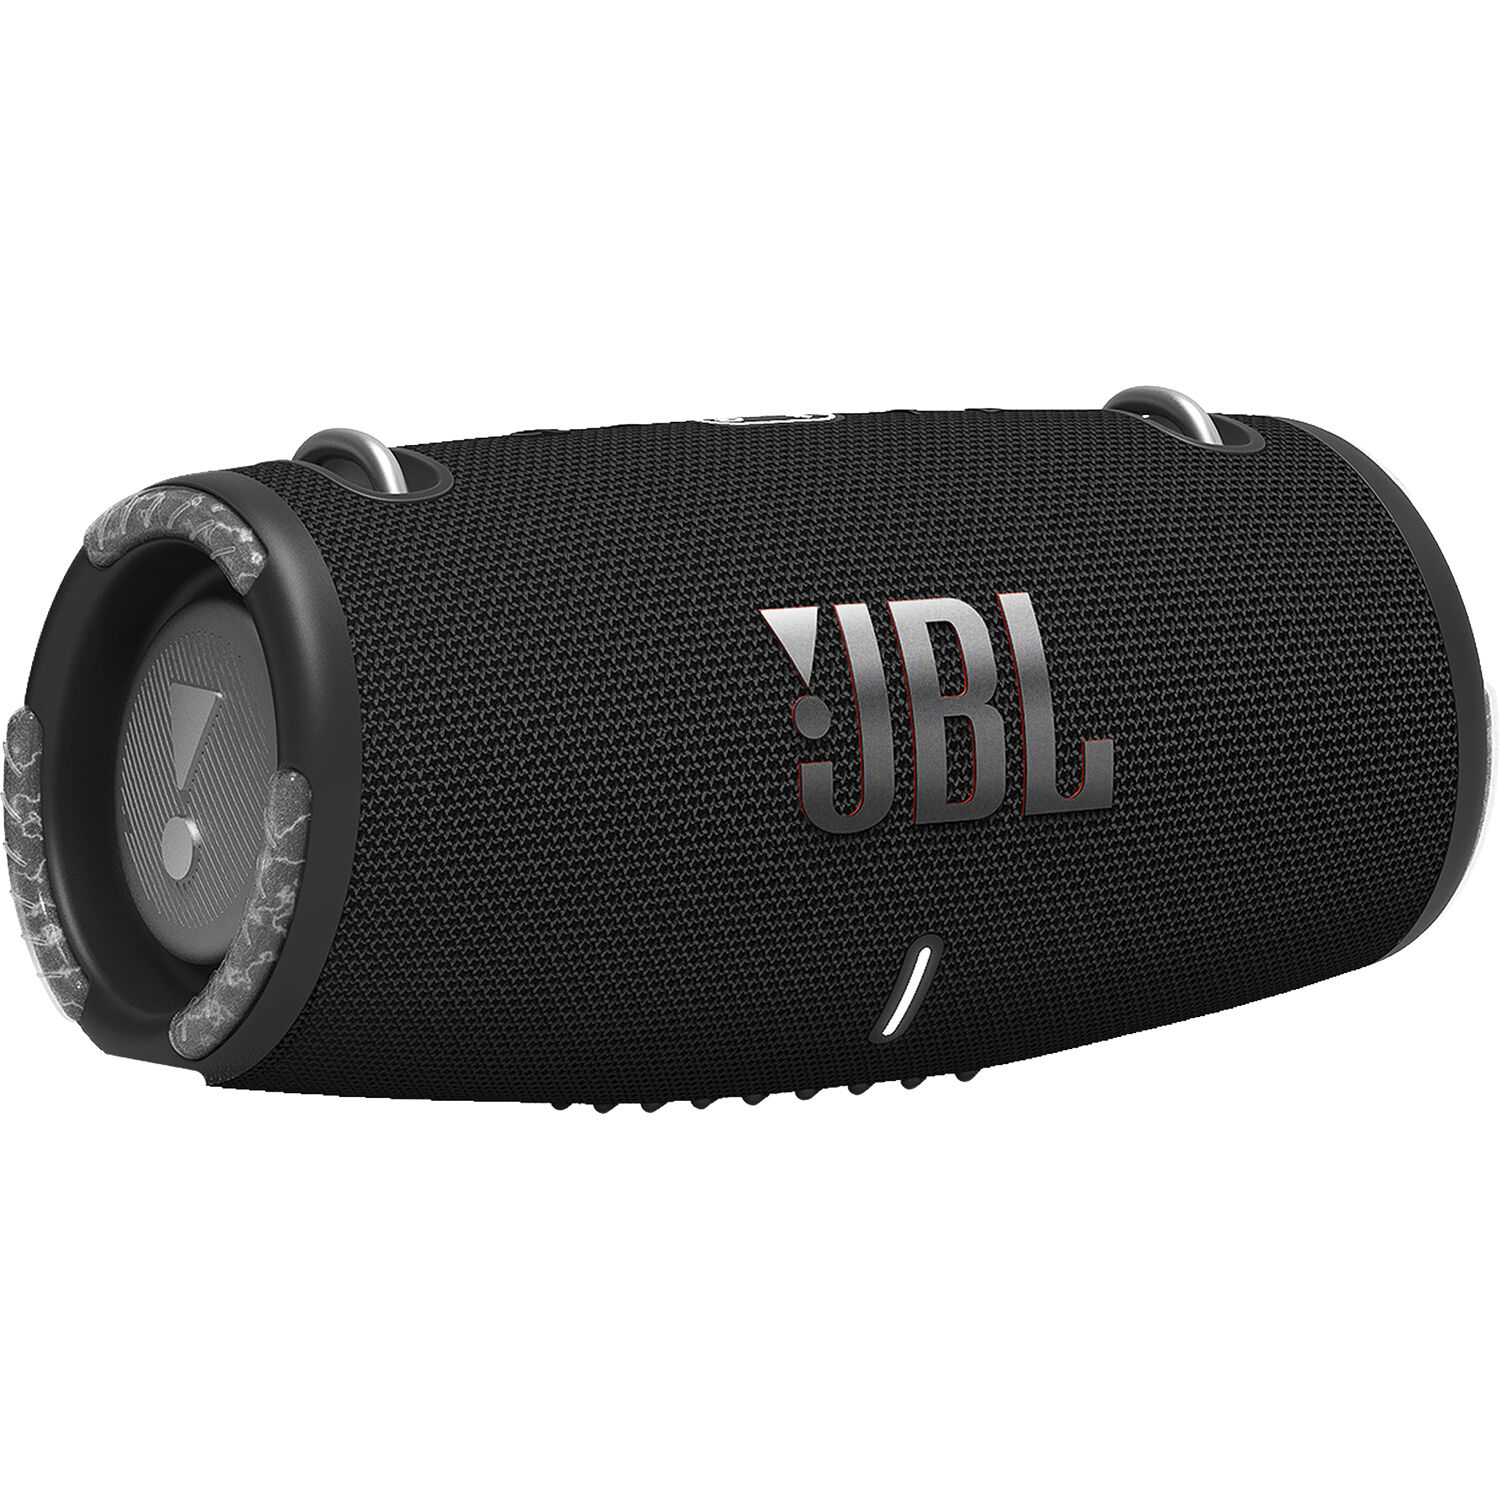 JBL JBLXTREME3BLKAM-Z Xtreme 3 Portable Waterproof Wireless Speaker, Black - Certified Refurbished